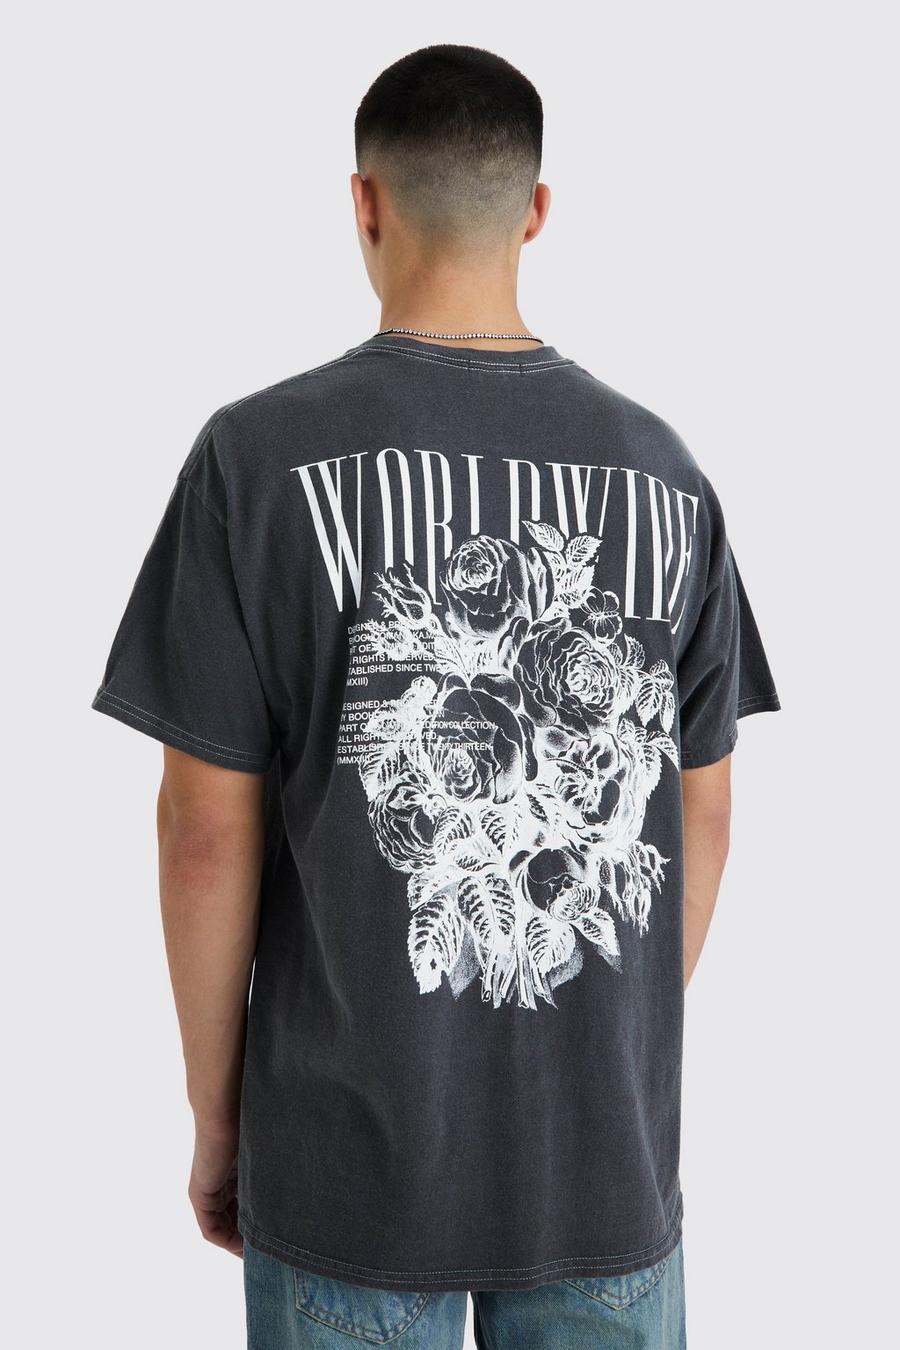 Charcoal grey Oversized Worldwide Wash Graphic T-shirt